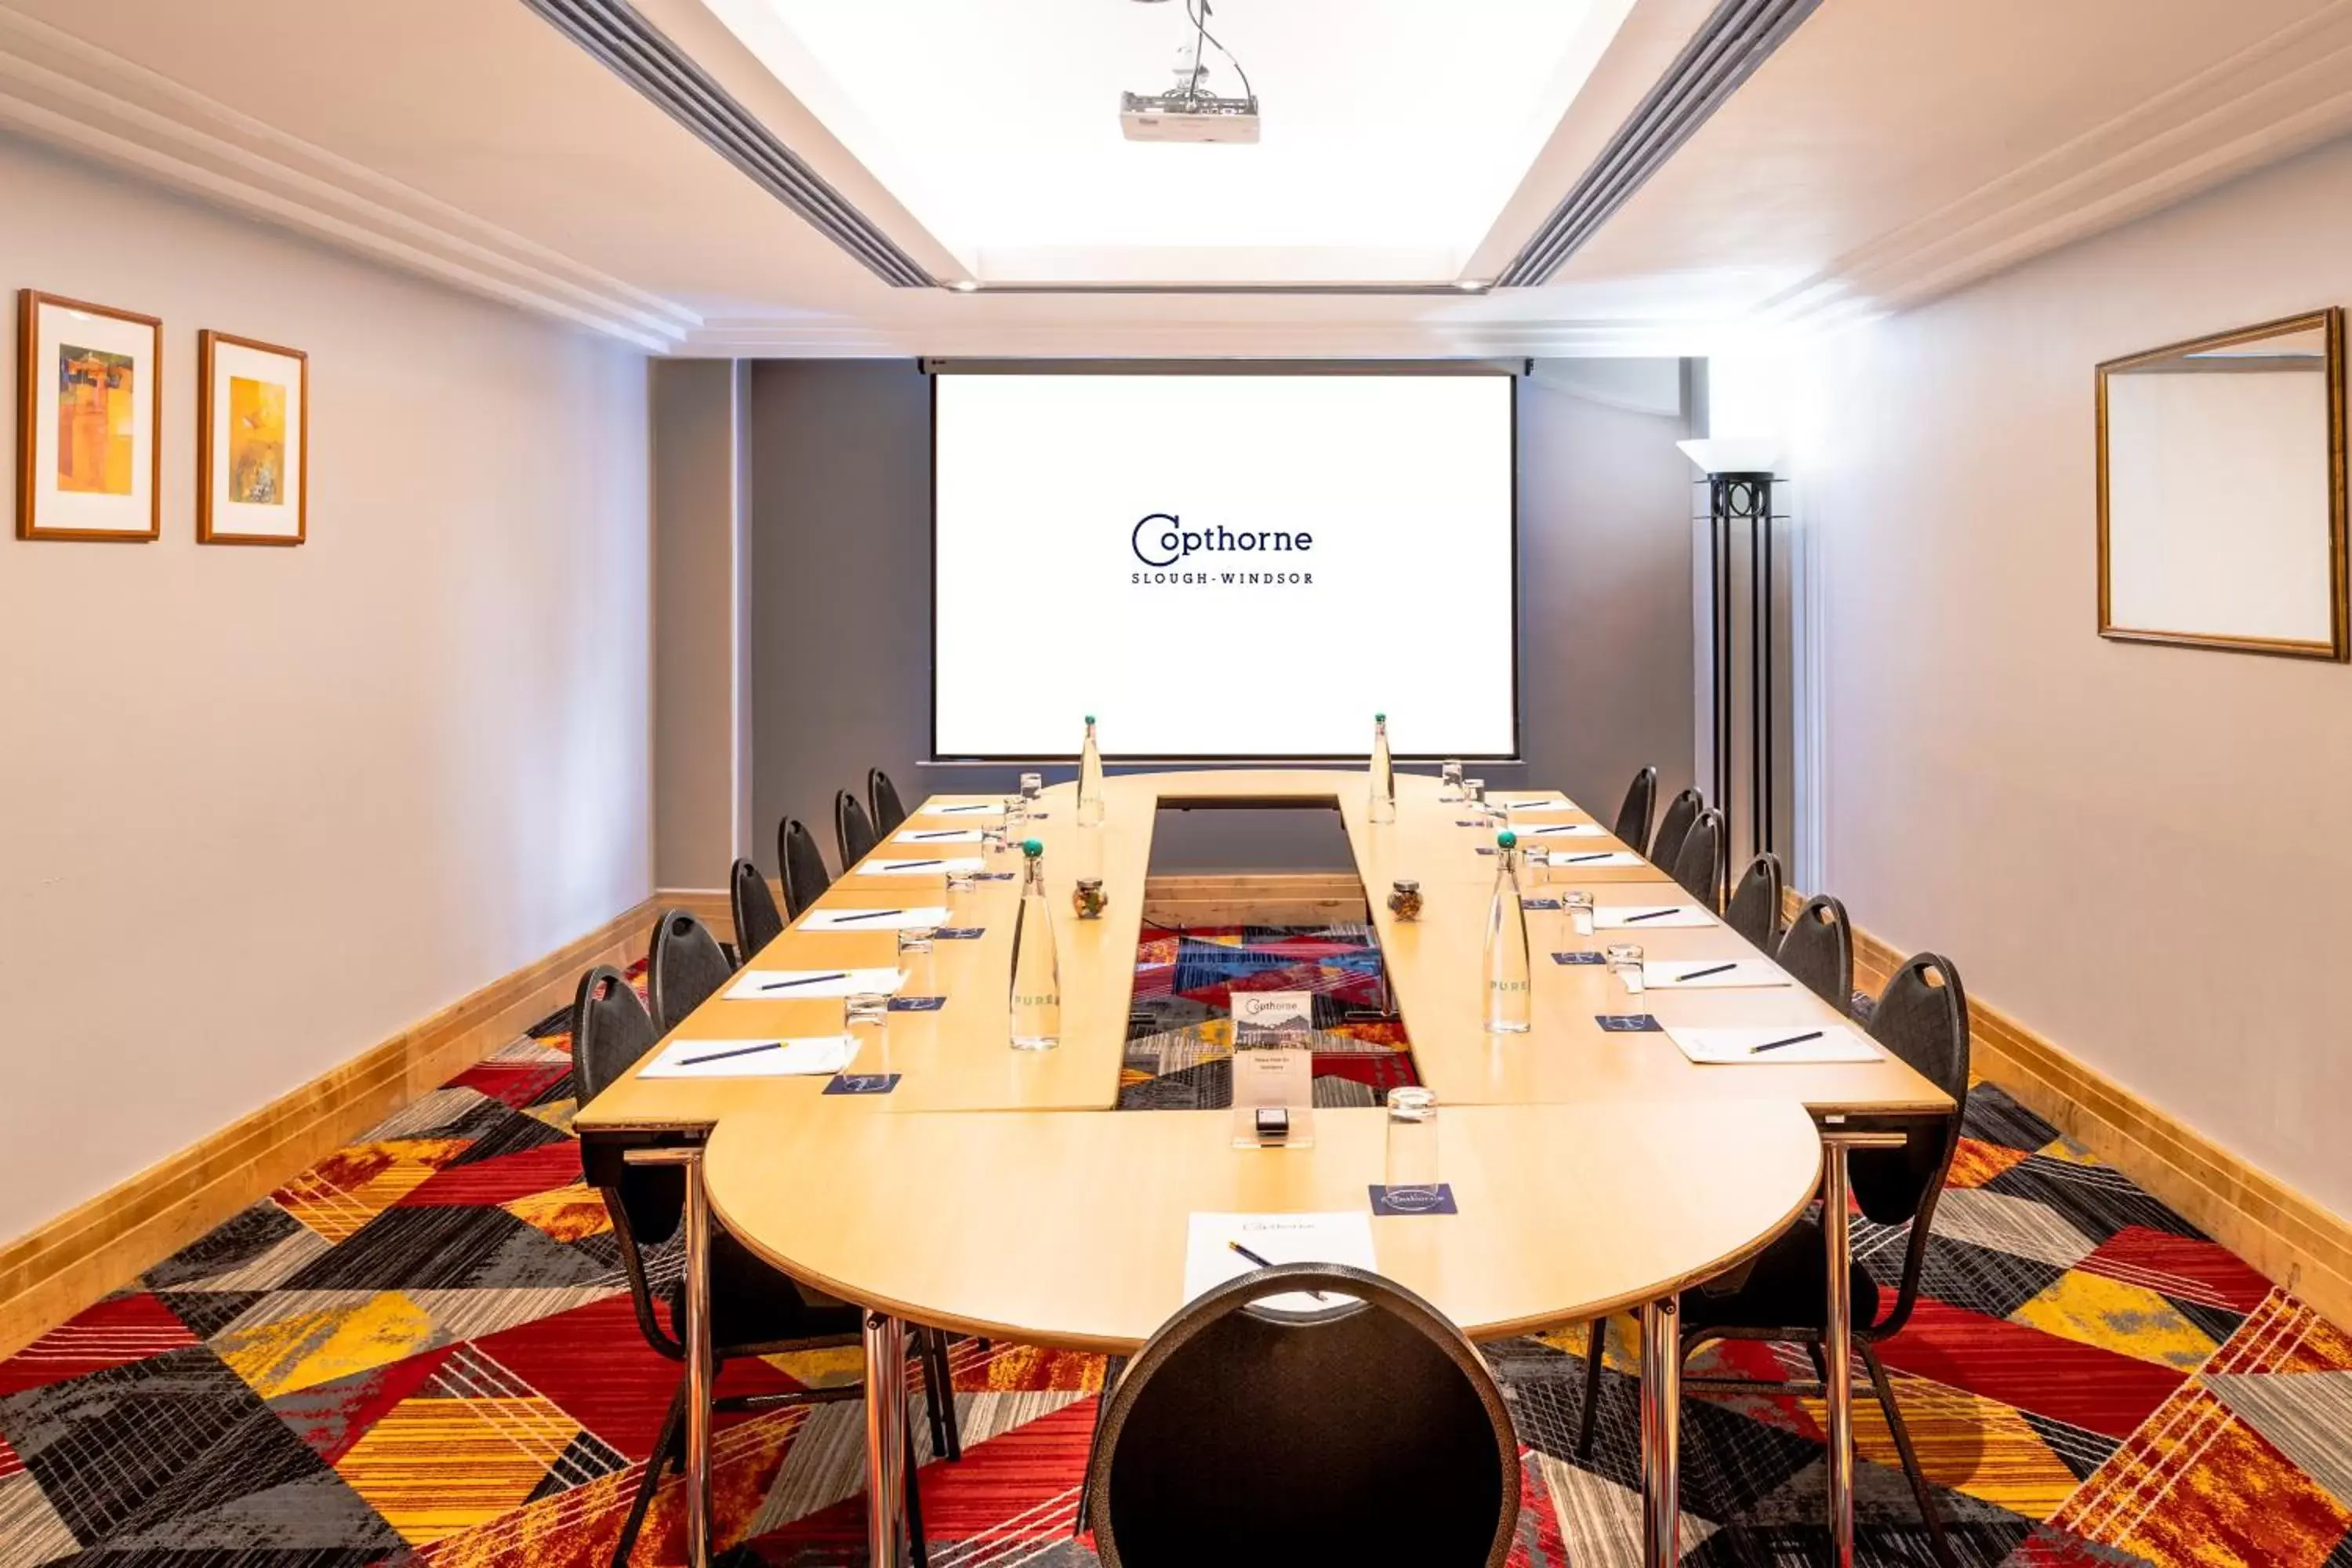 Meeting/conference room in Copthorne Hotel Slough Windsor